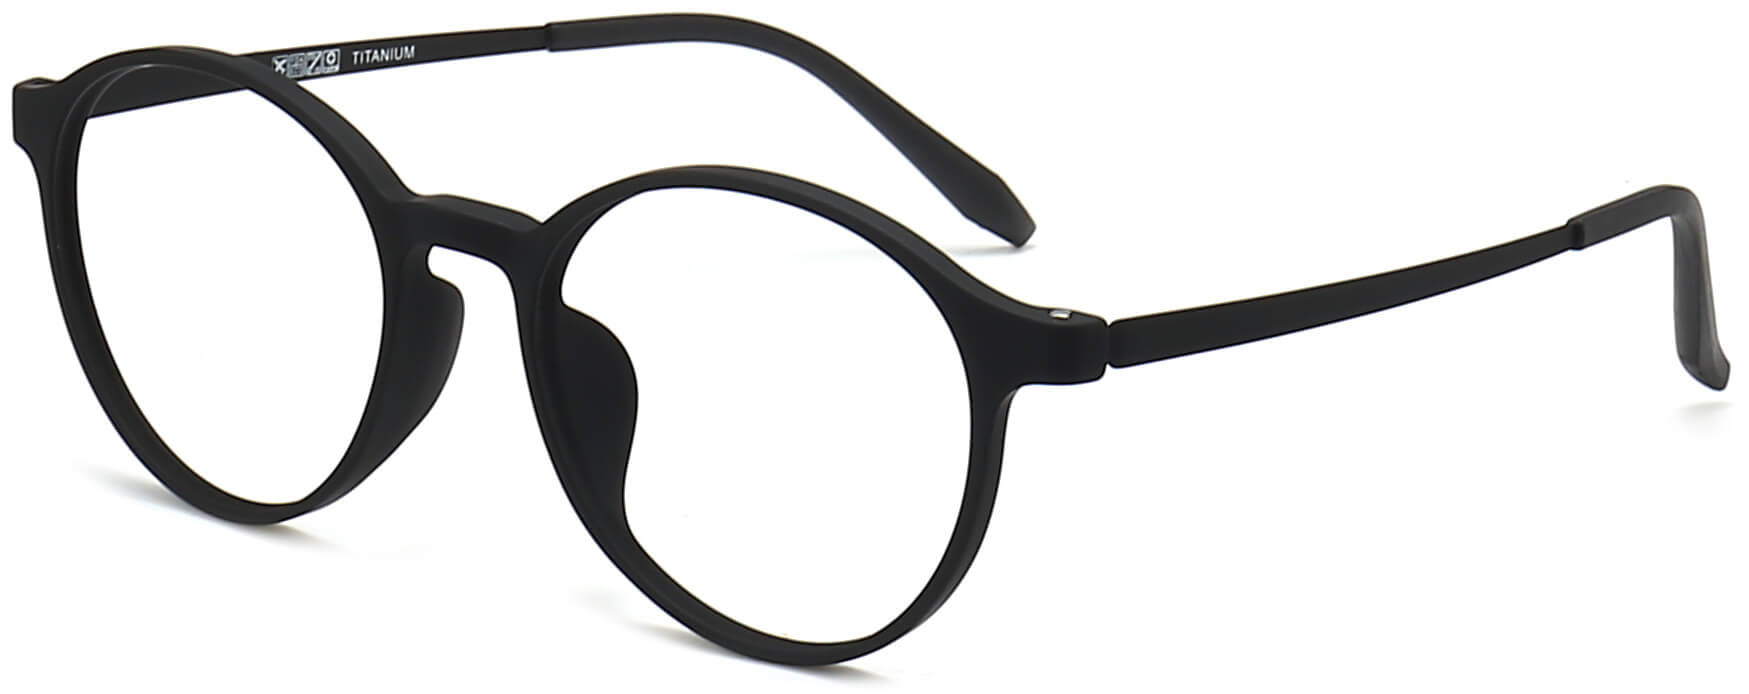 Karsyn Round Black Eyeglasses from ANRRI, angle view